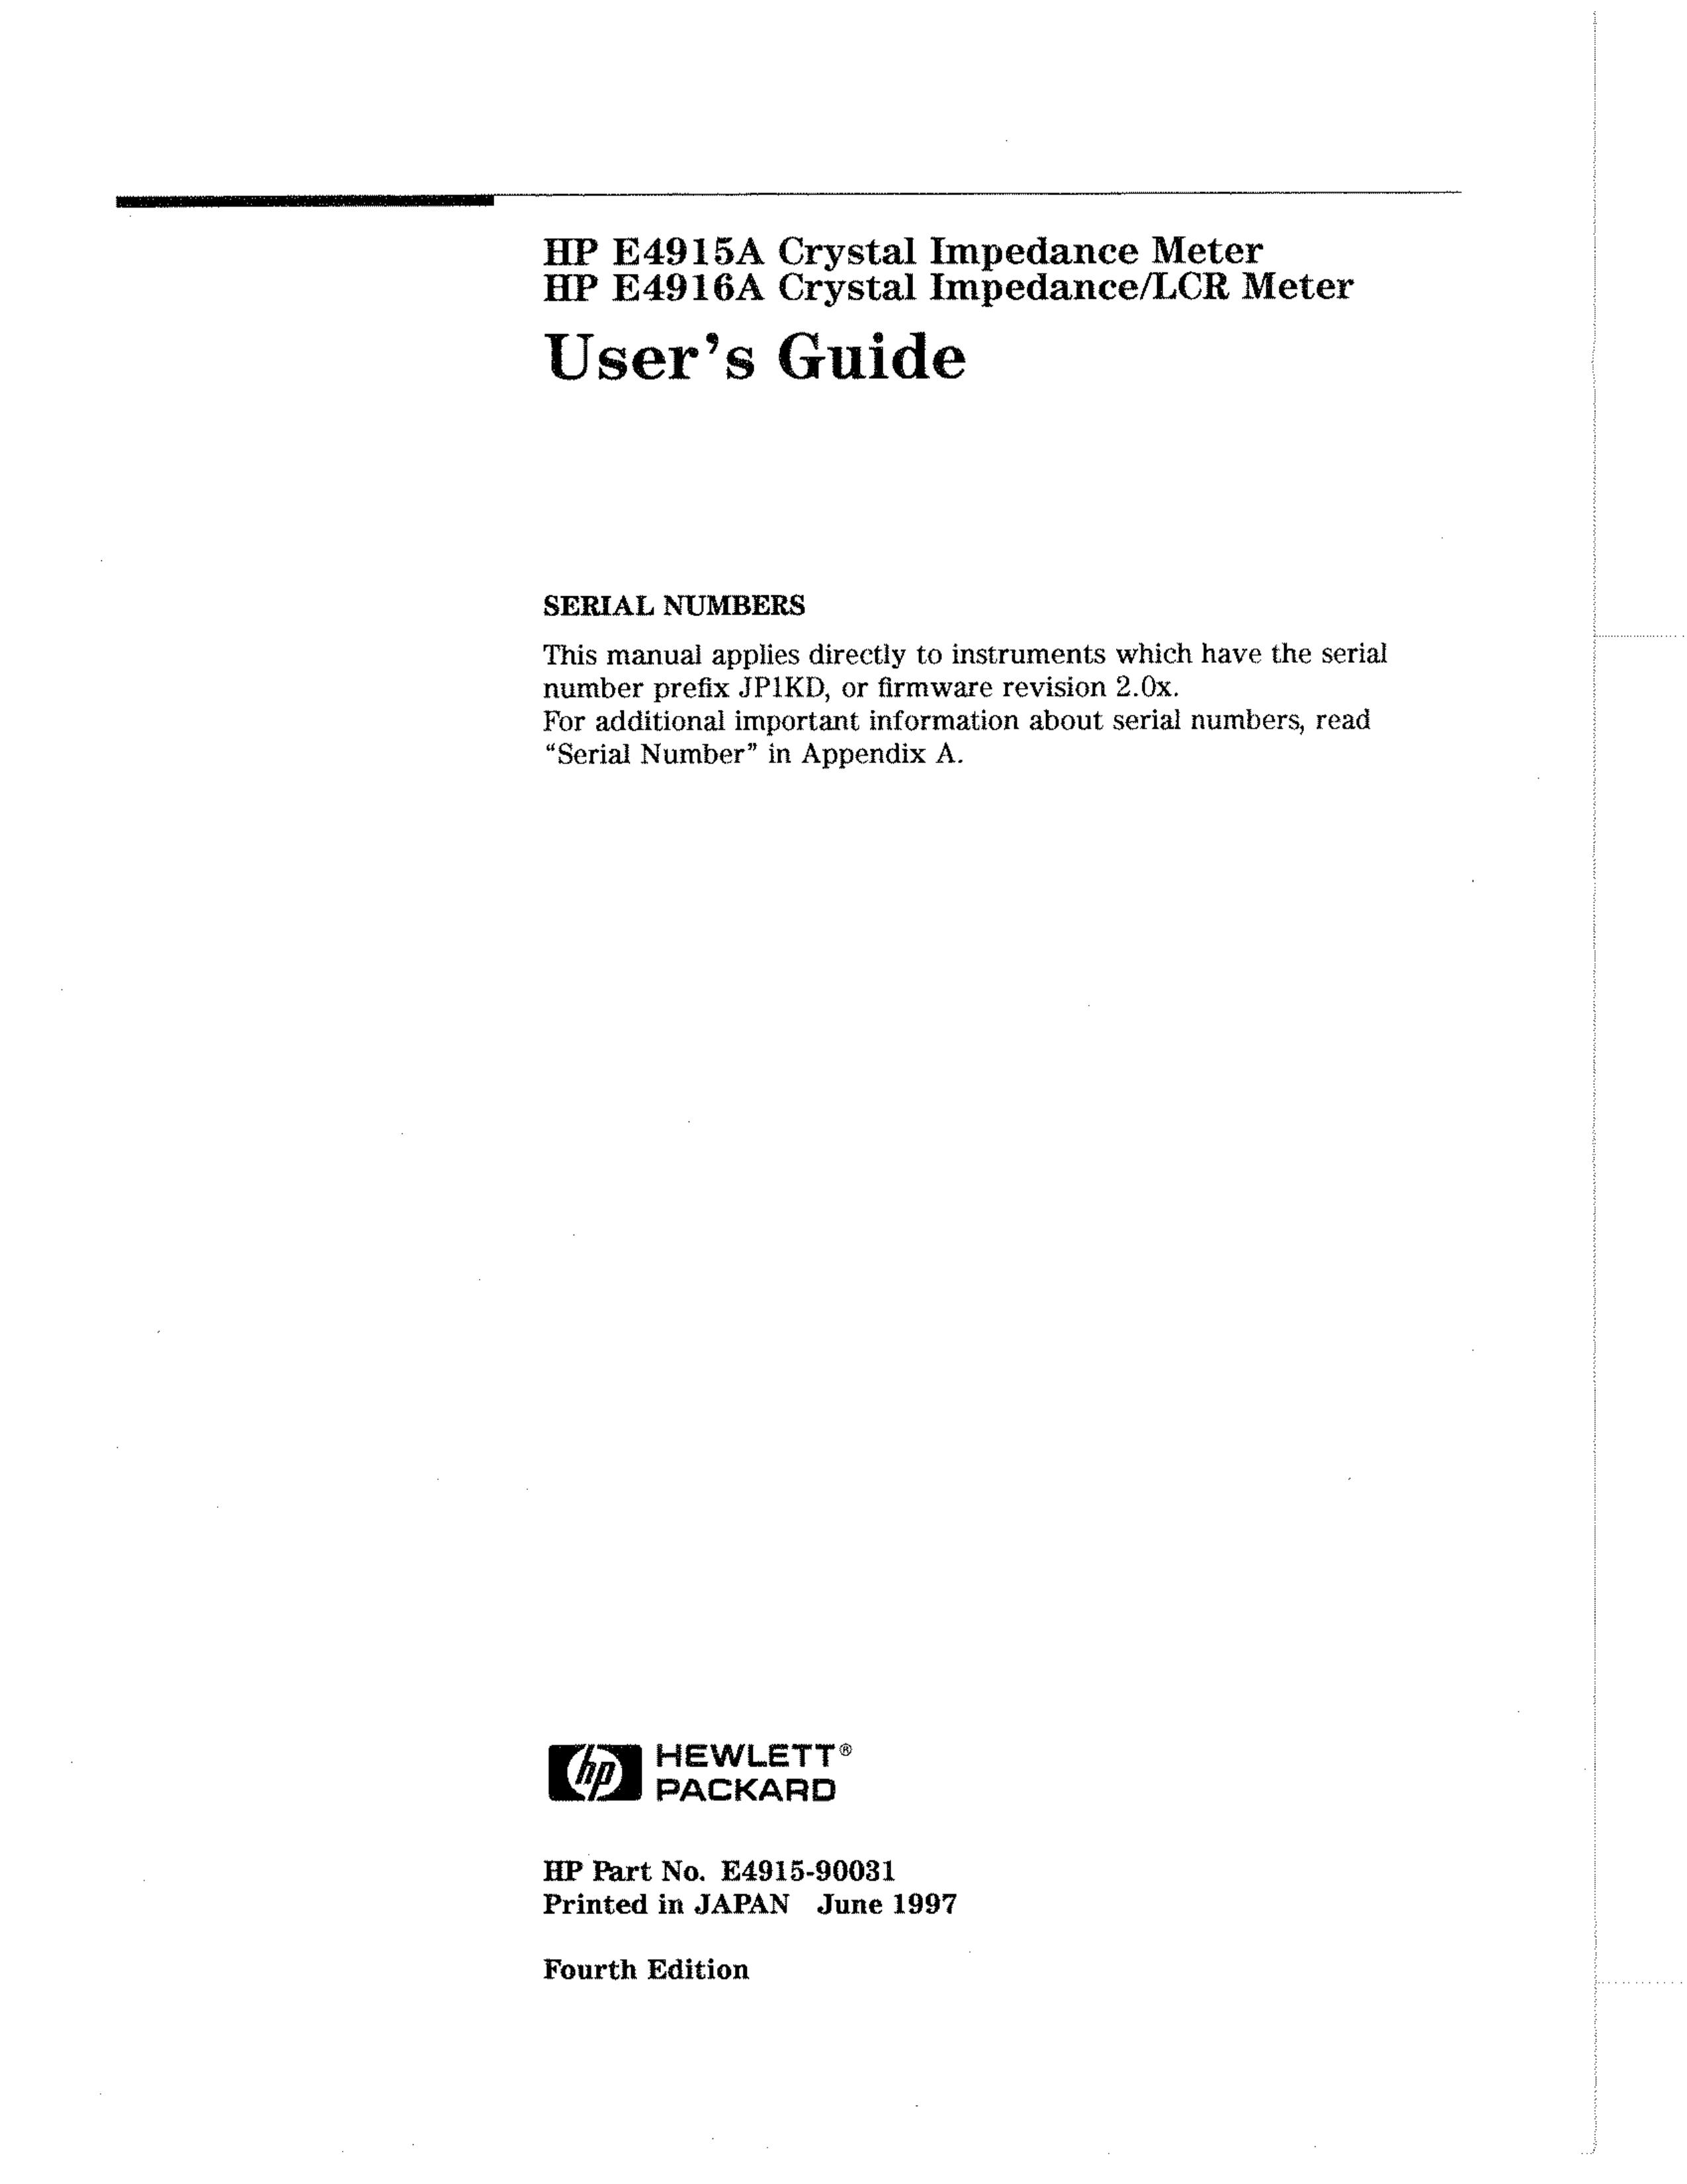 HP (Hewlett-Packard) HP4916A Weather Radio User Manual